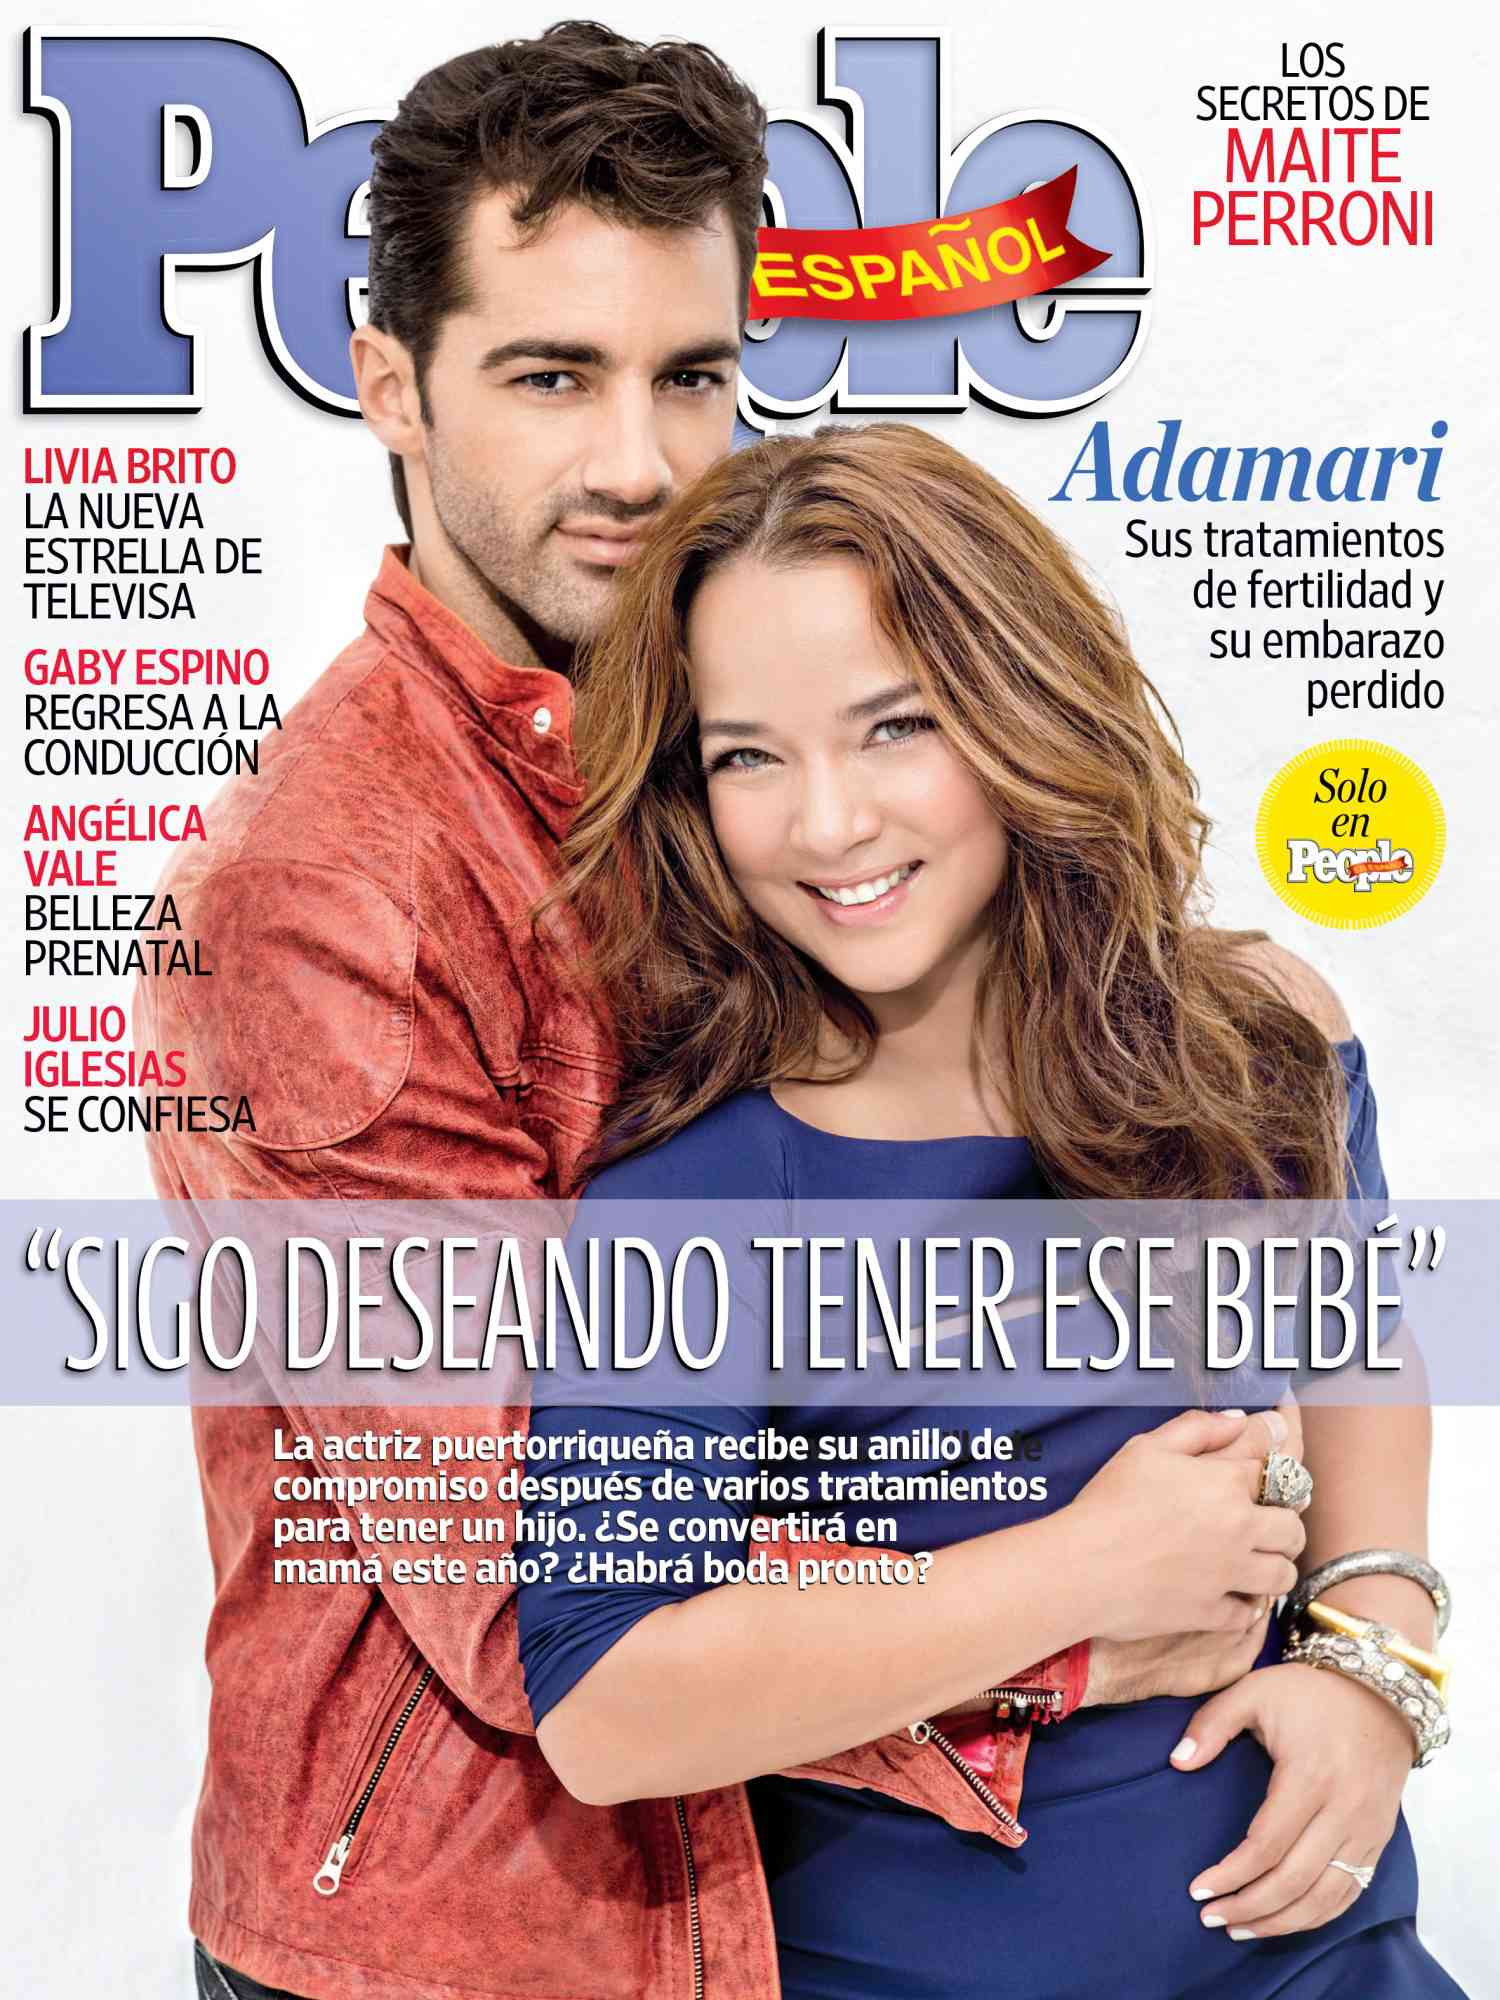 Adamari Lopez y Toni Costa - Agosto 2014 Portada COVER